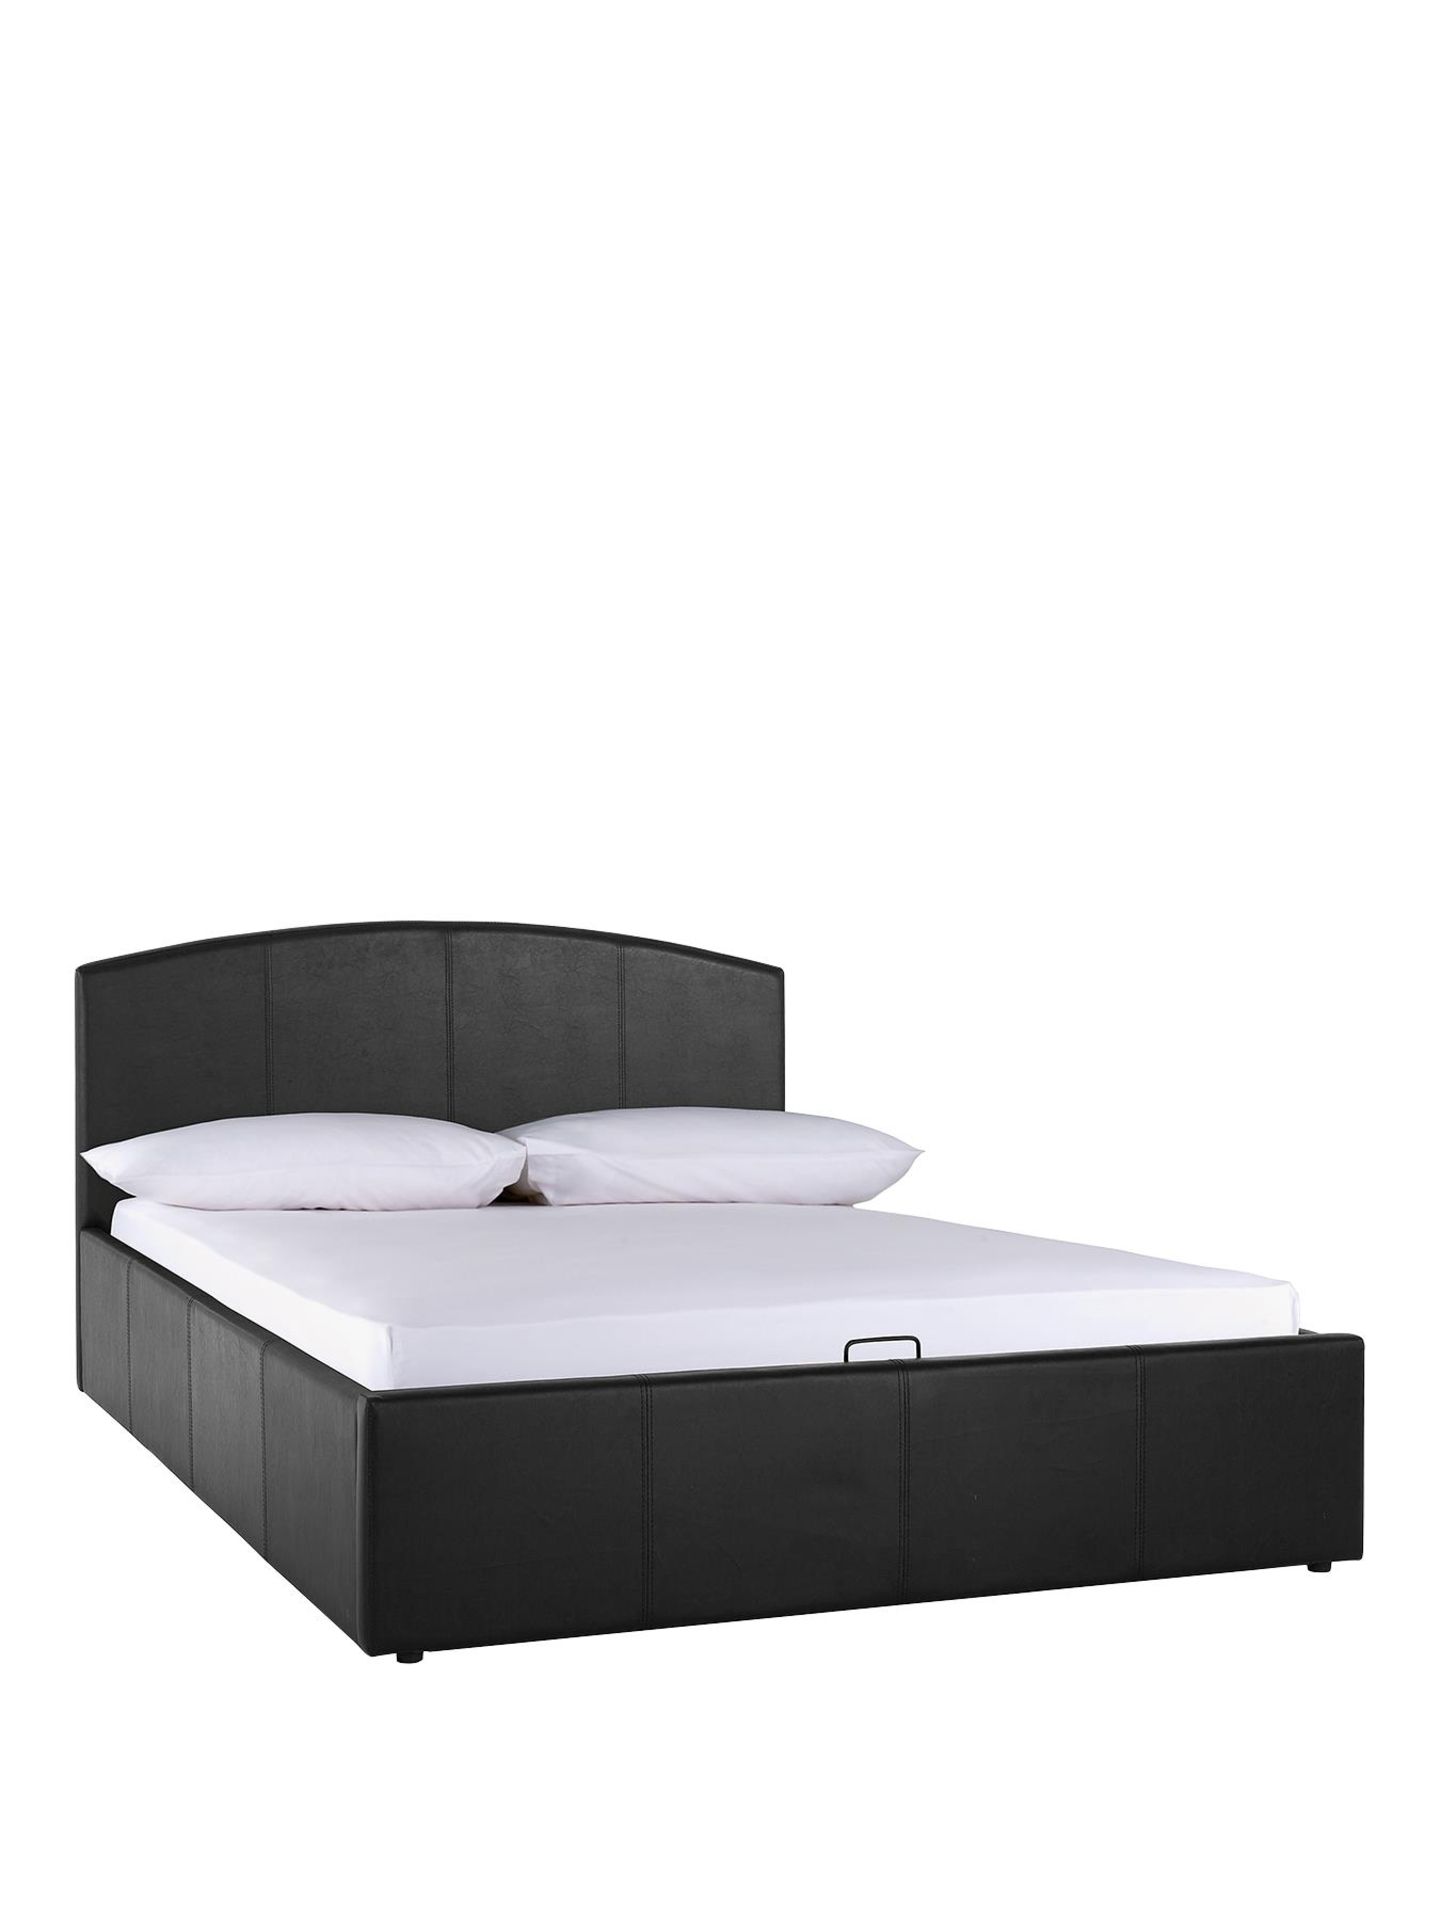 Boxed Item Marston King Lift-Up Bed [Black] 88X159X212Cm Rrp:£538.0 - Bild 2 aus 2